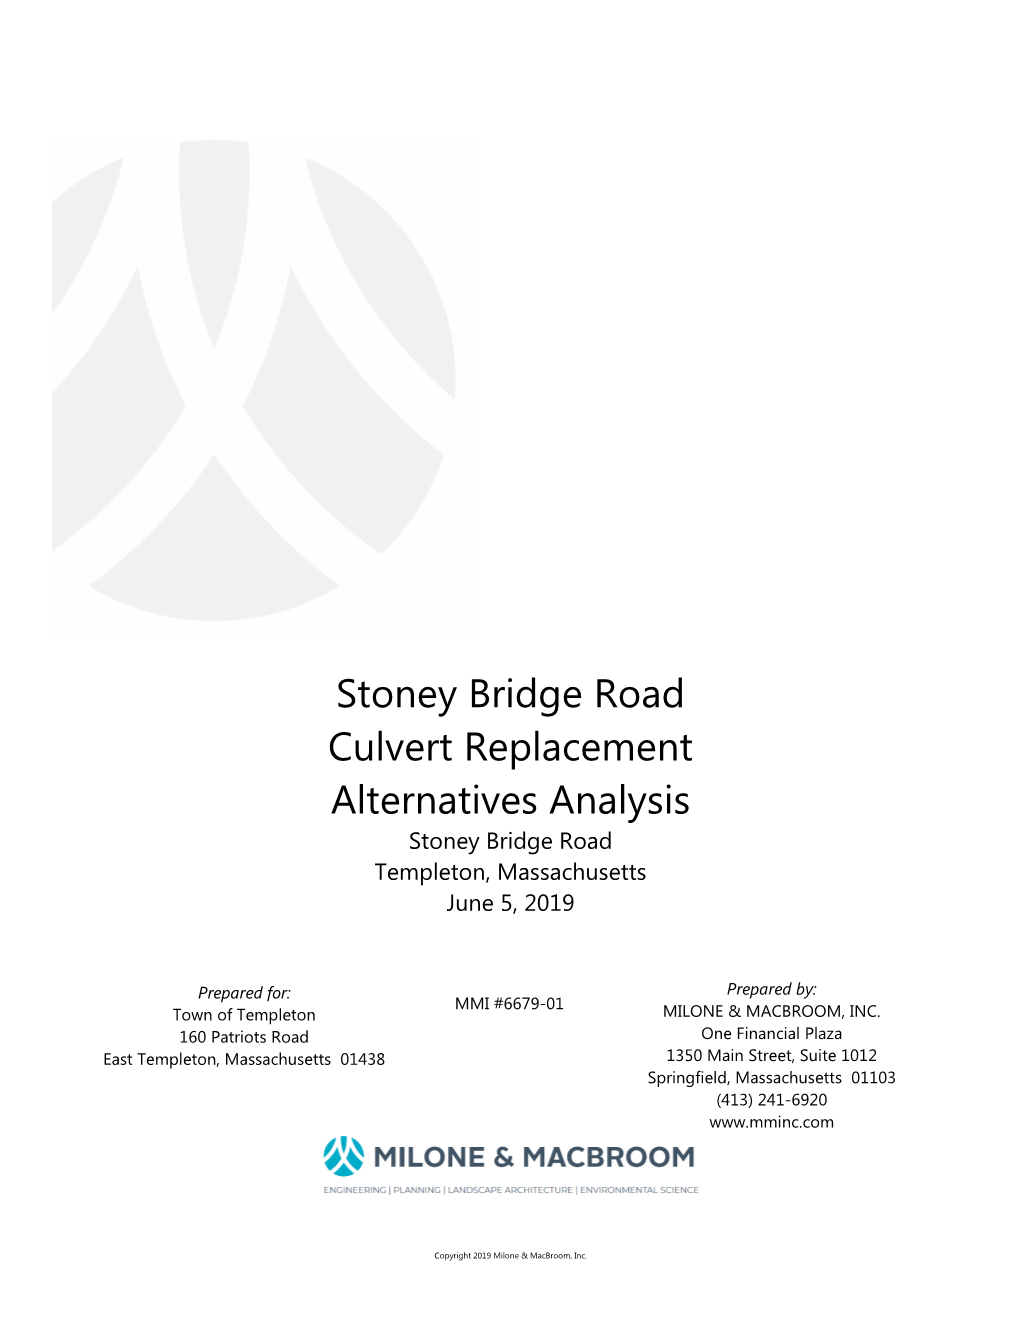 Stoney Bridge Road Culvert Replacement Alternatives Analysis Stoney Bridge Road Templeton, Massachusetts June 5, 2019